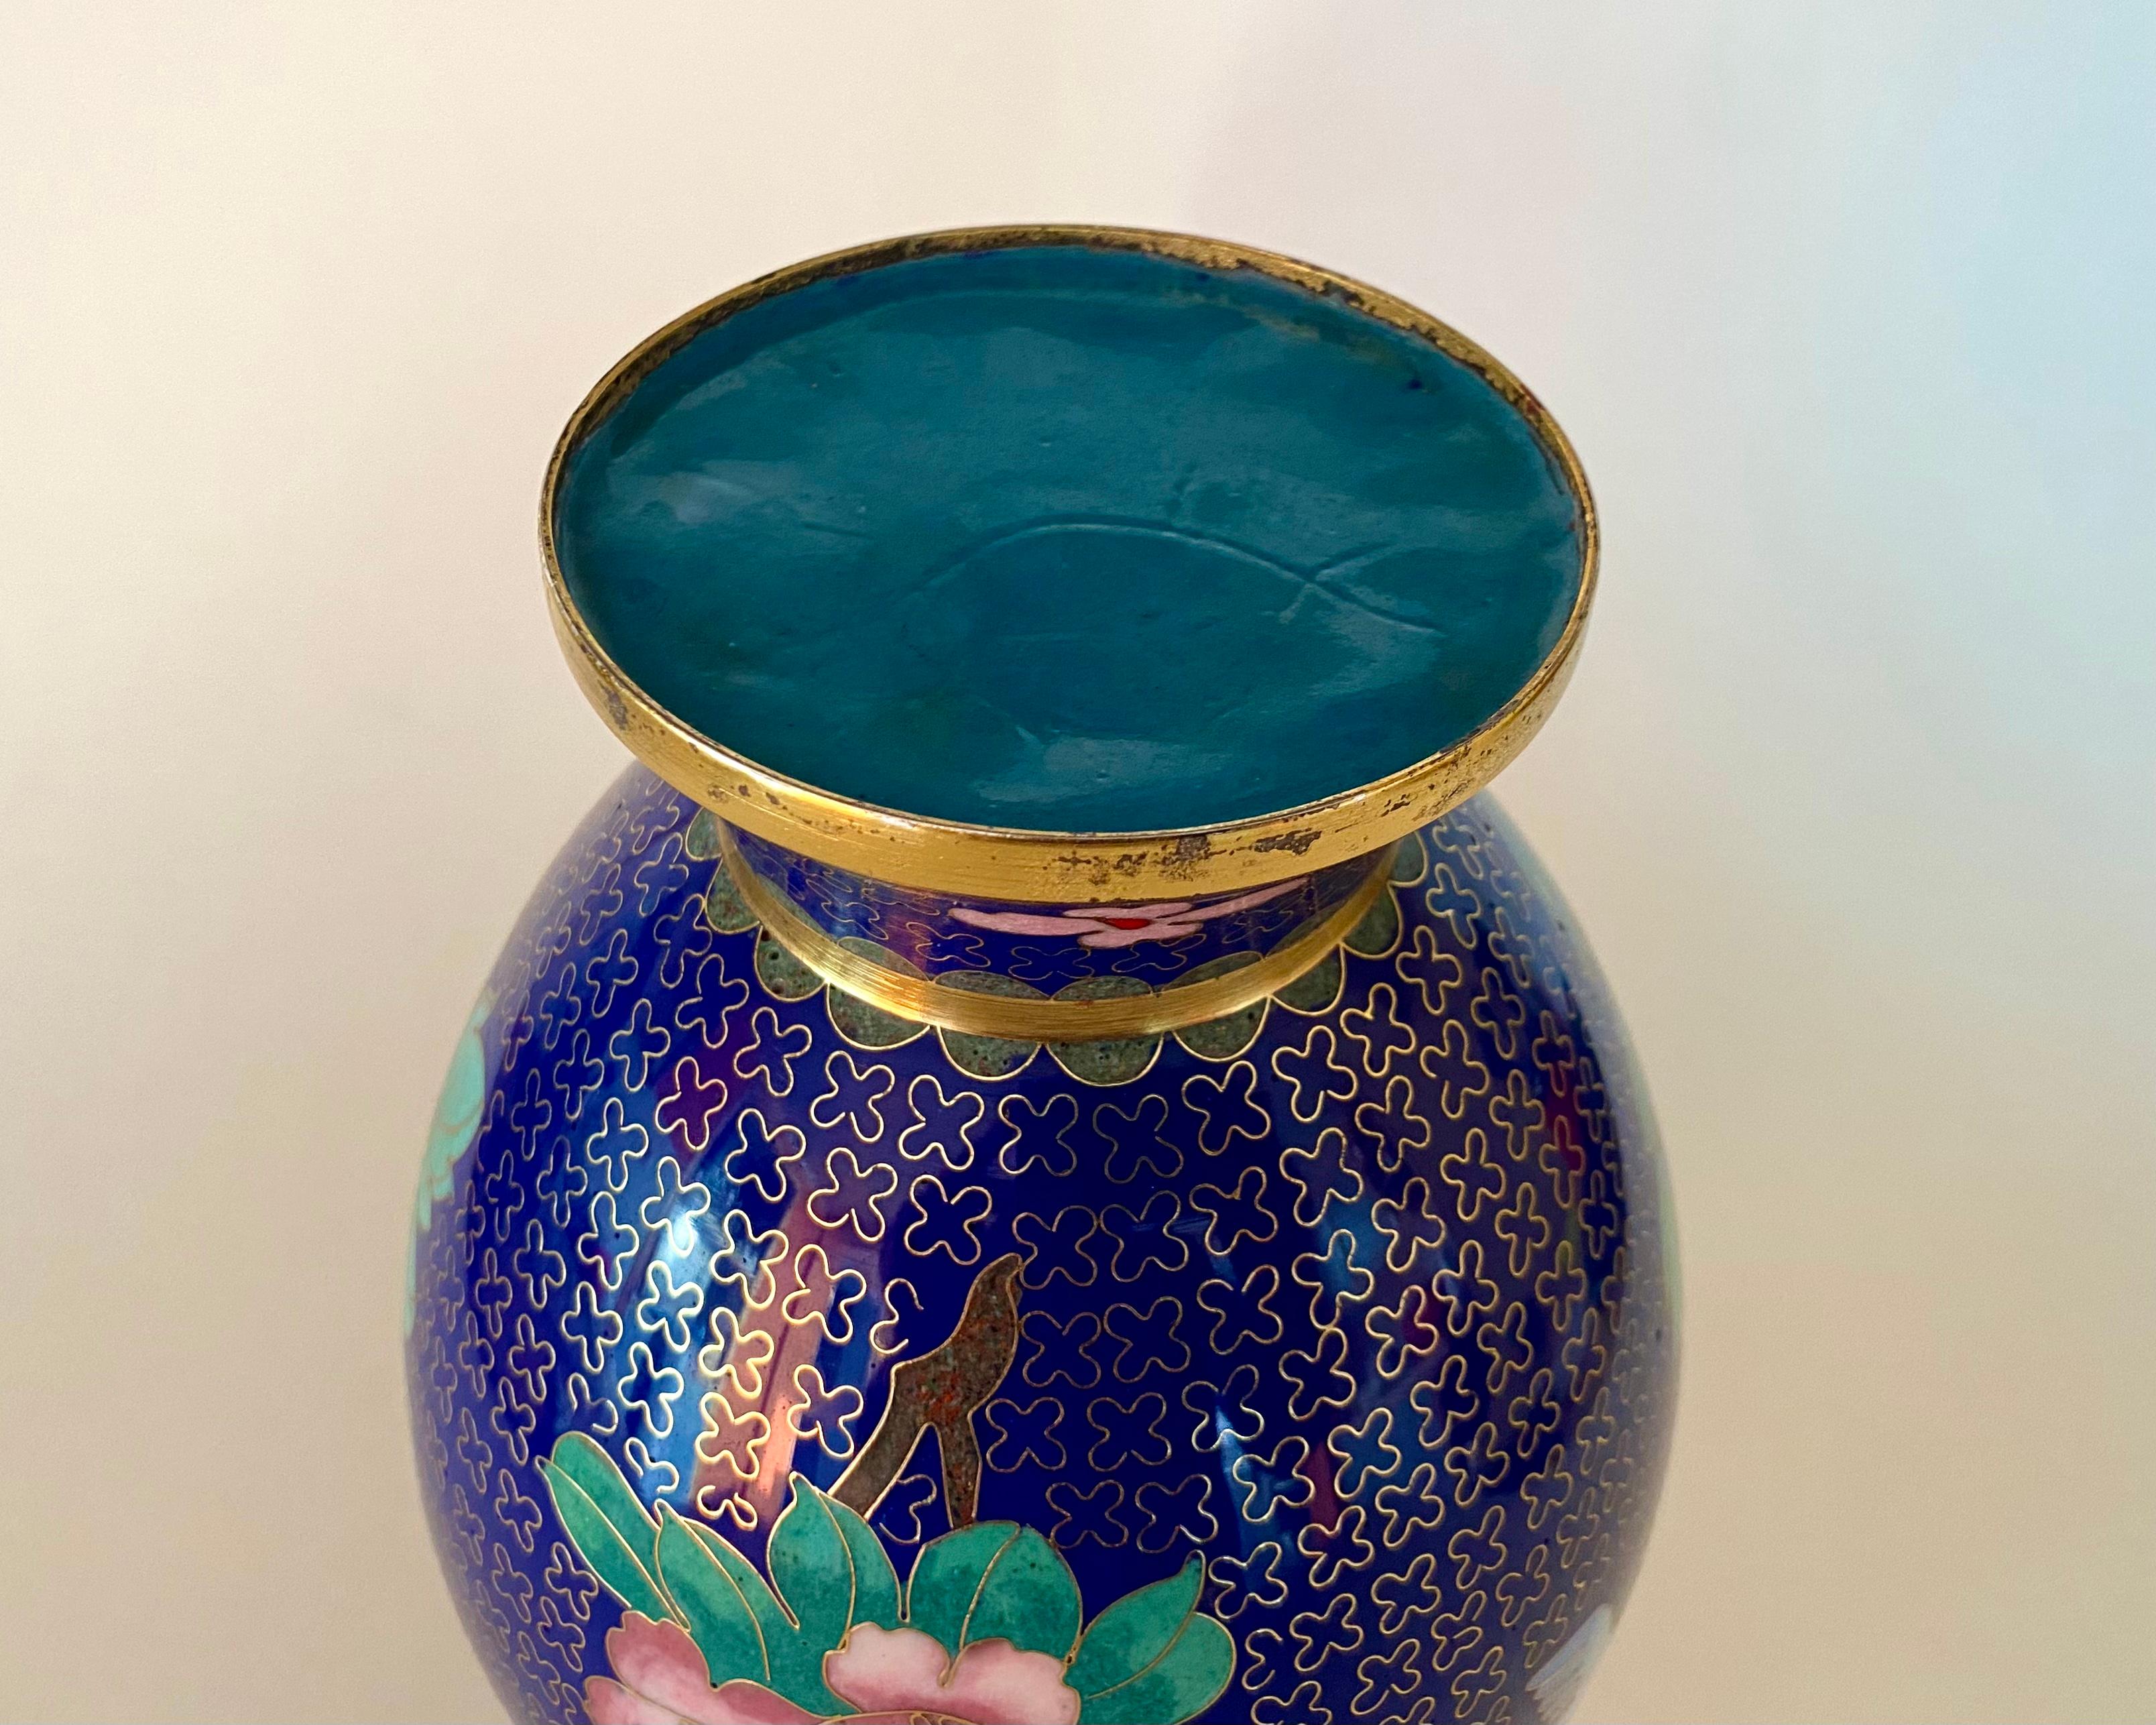 Vintage Enamel and Brass Vase in Cloisonné Technique, China, 1980 For Sale 2